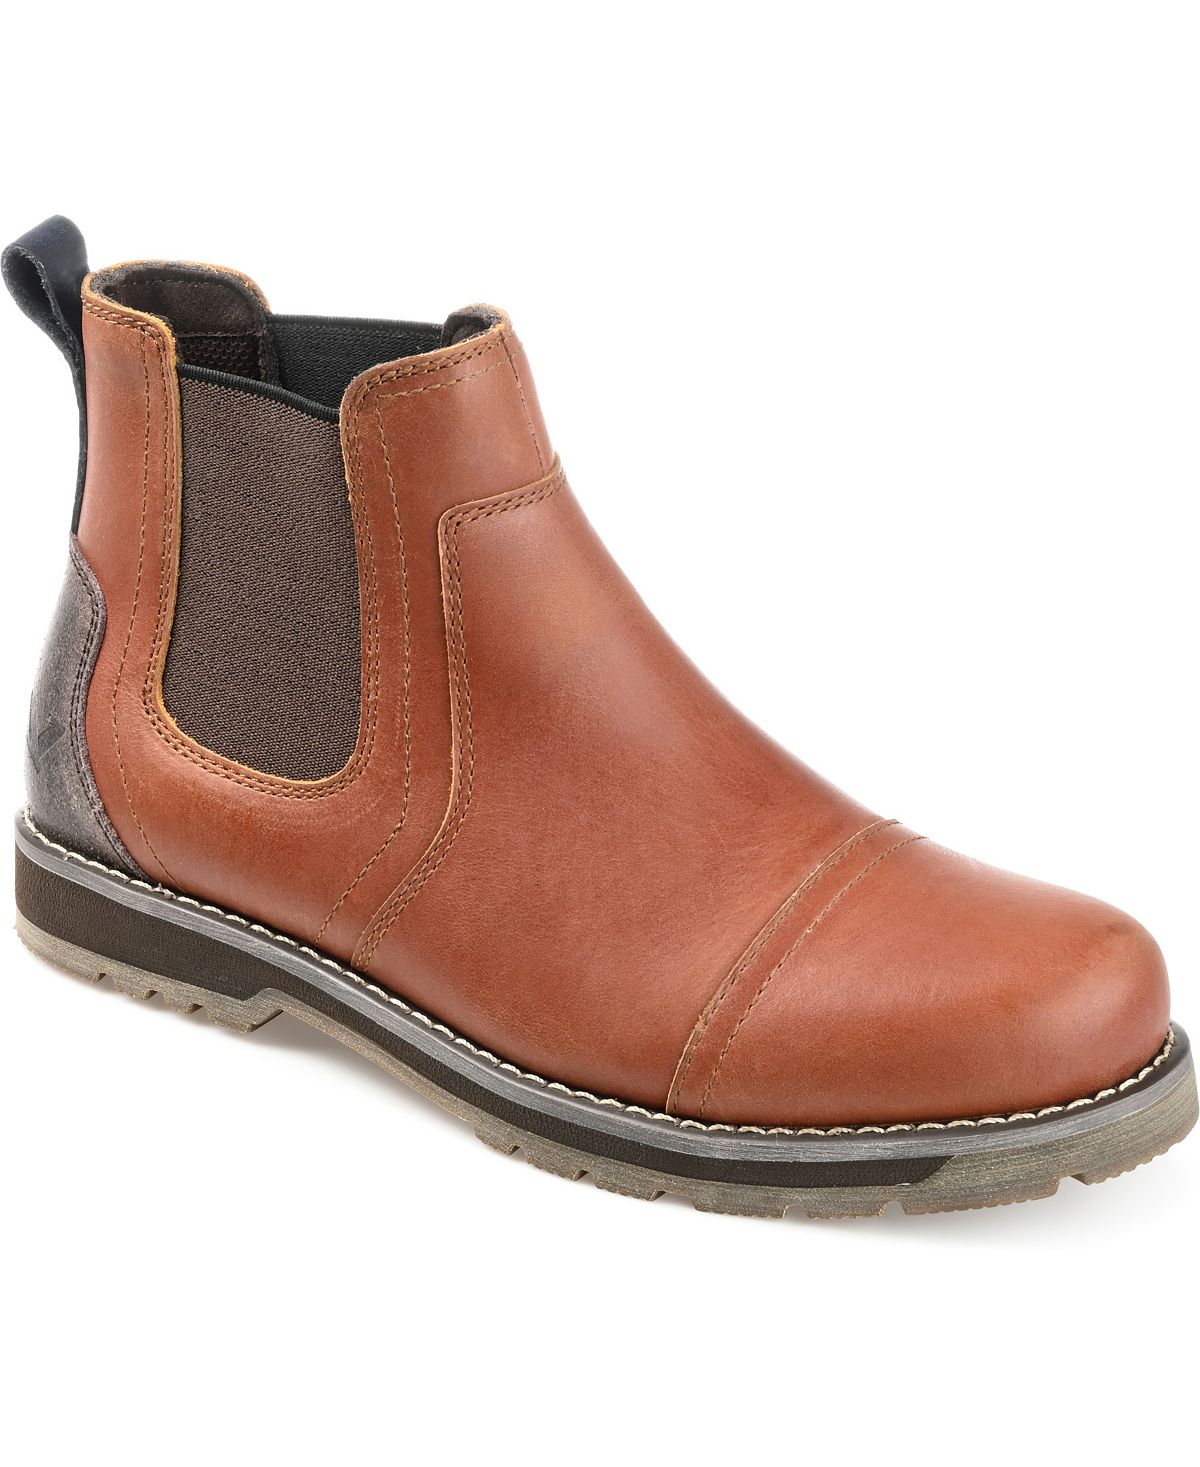 Мужские ботинки челси holloway cap toe Territory, коричневый